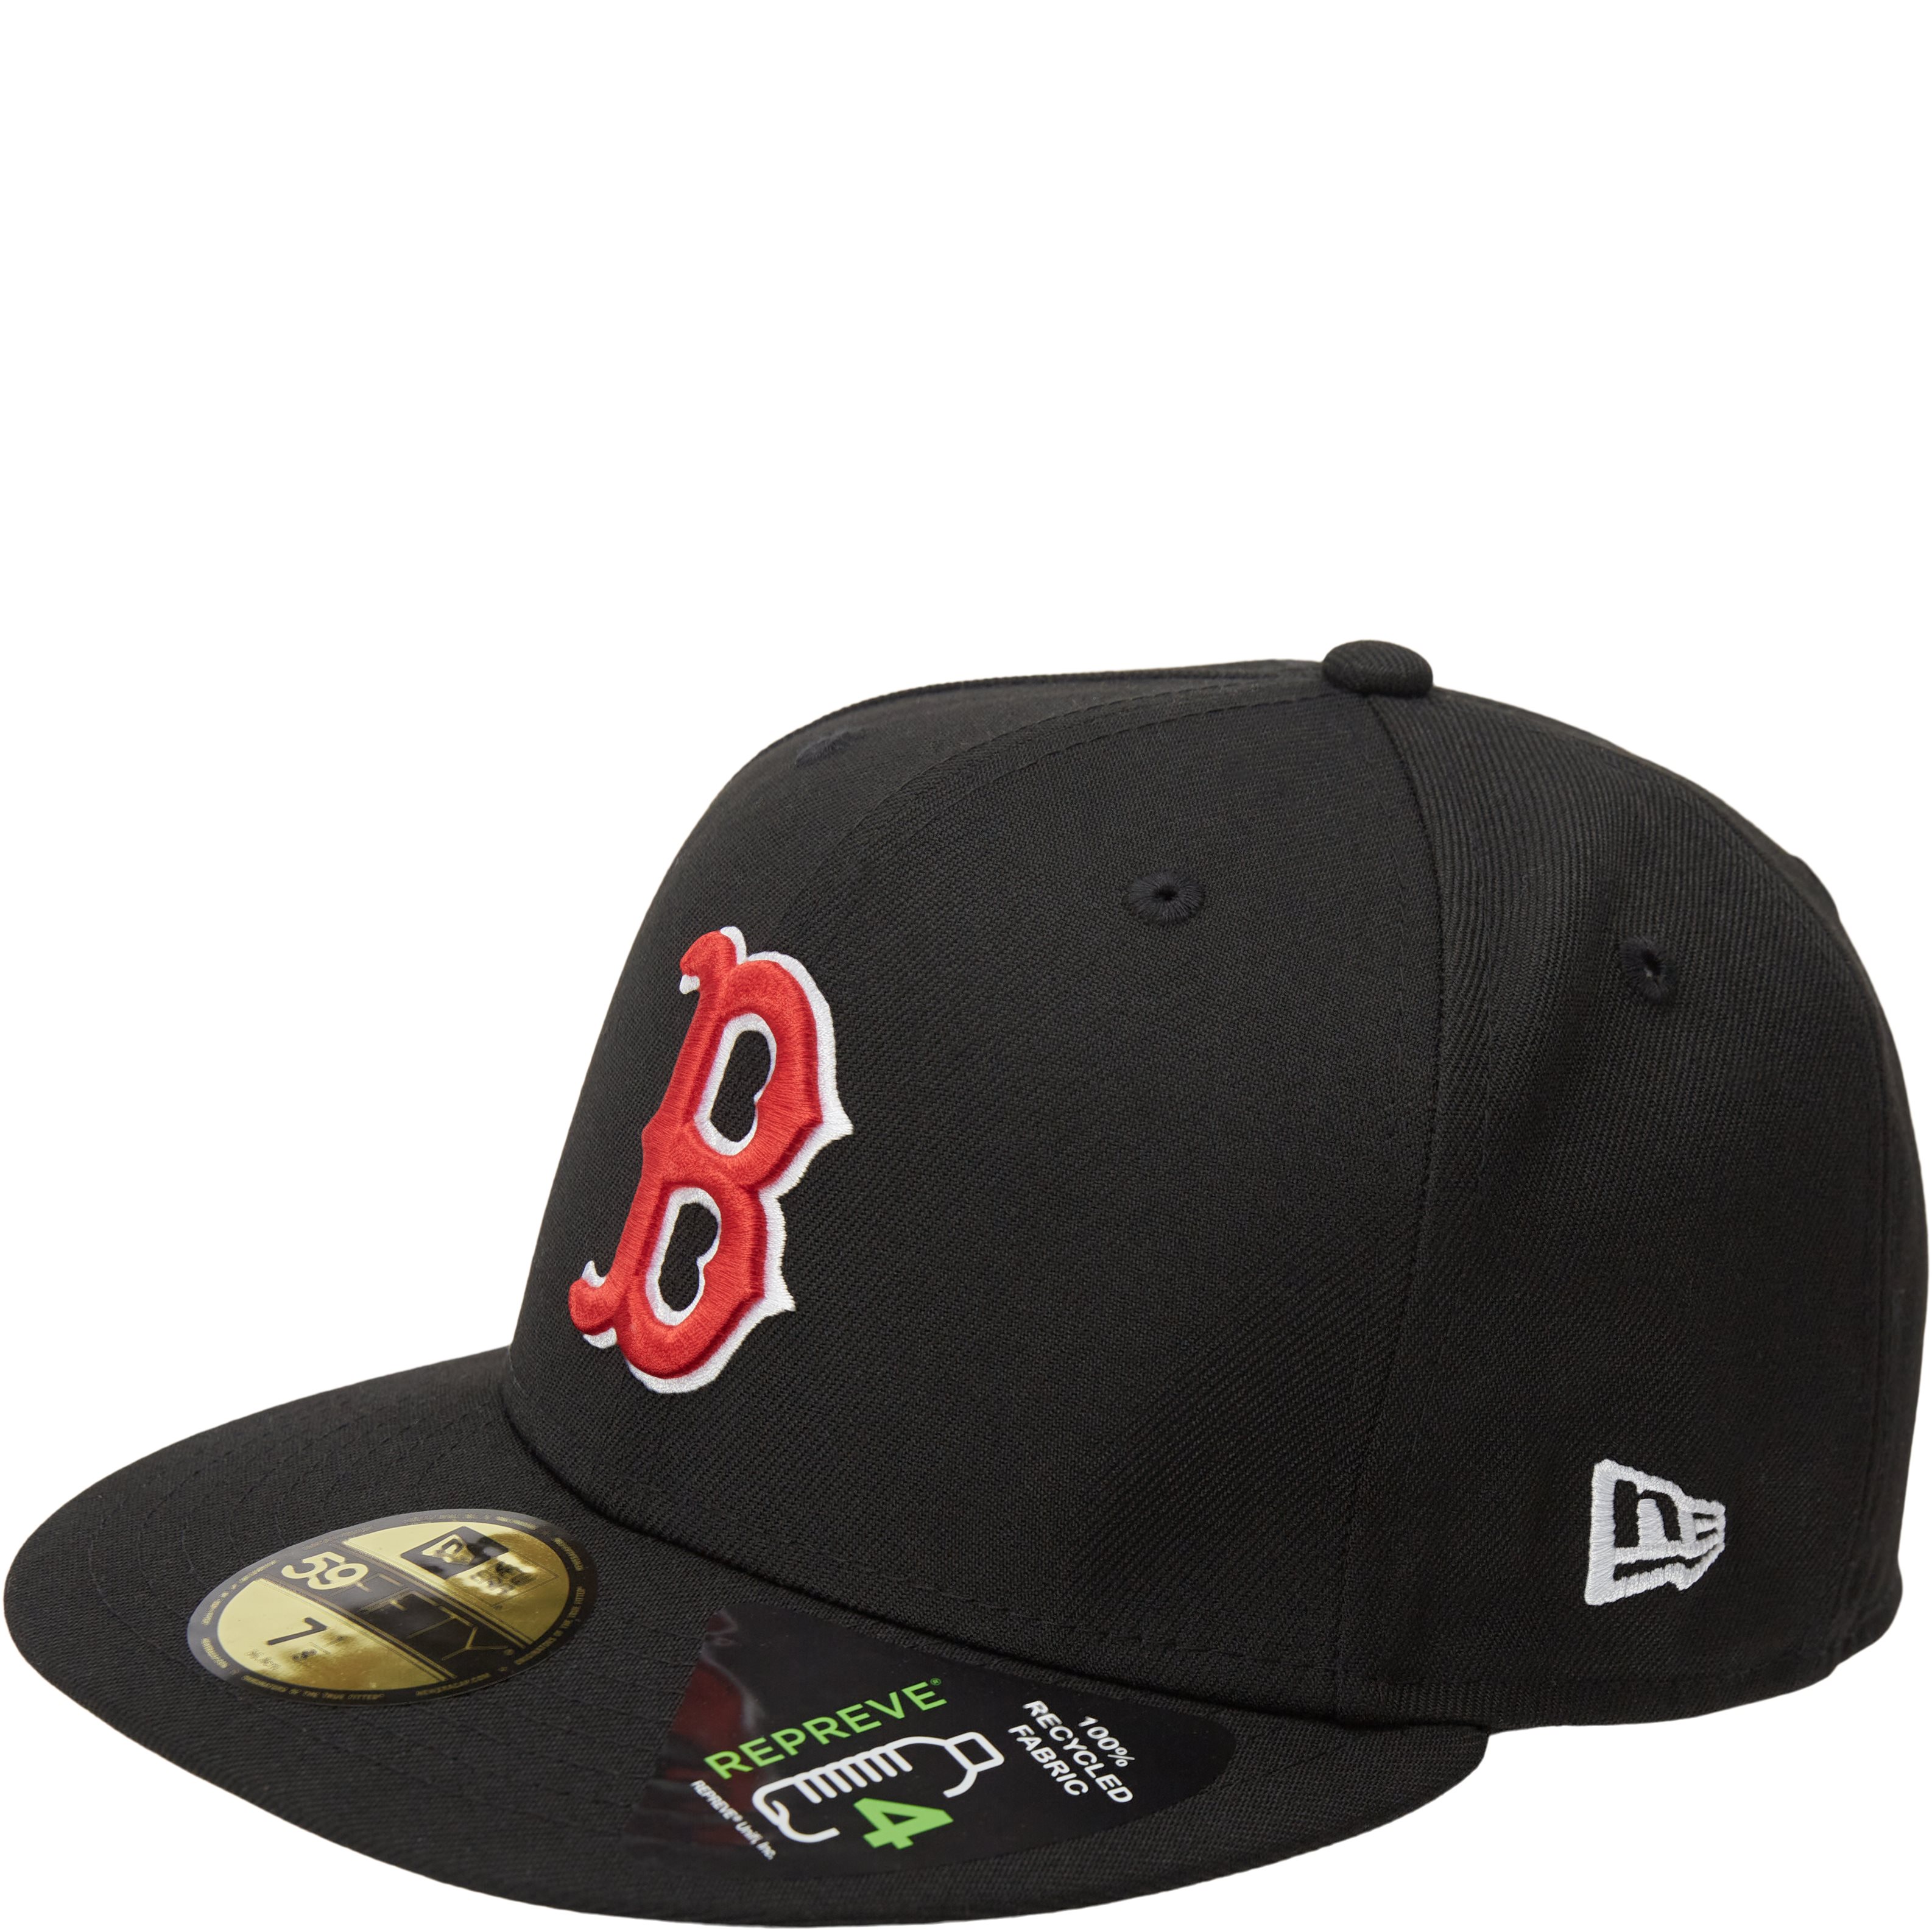 59 Fifty Boston Cap - Caps - Black